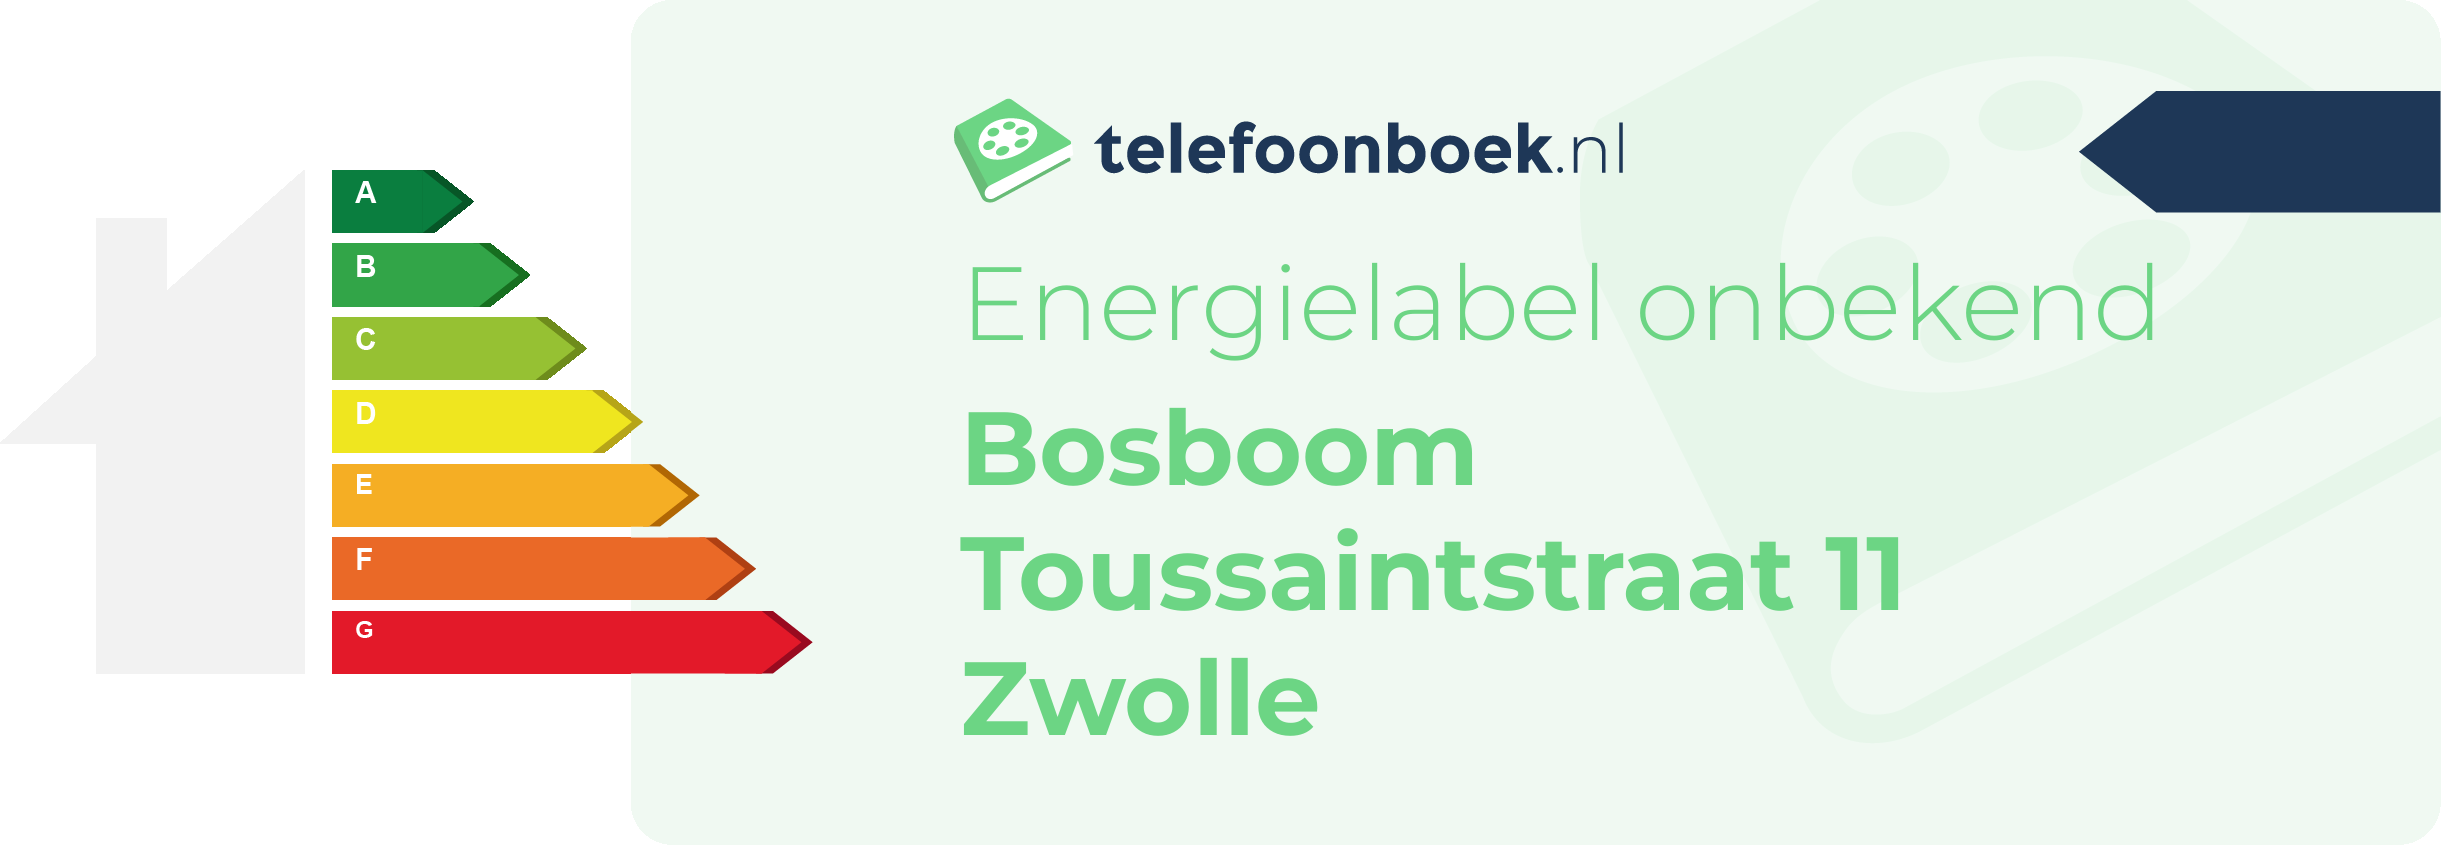 Energielabel Bosboom Toussaintstraat 11 Zwolle